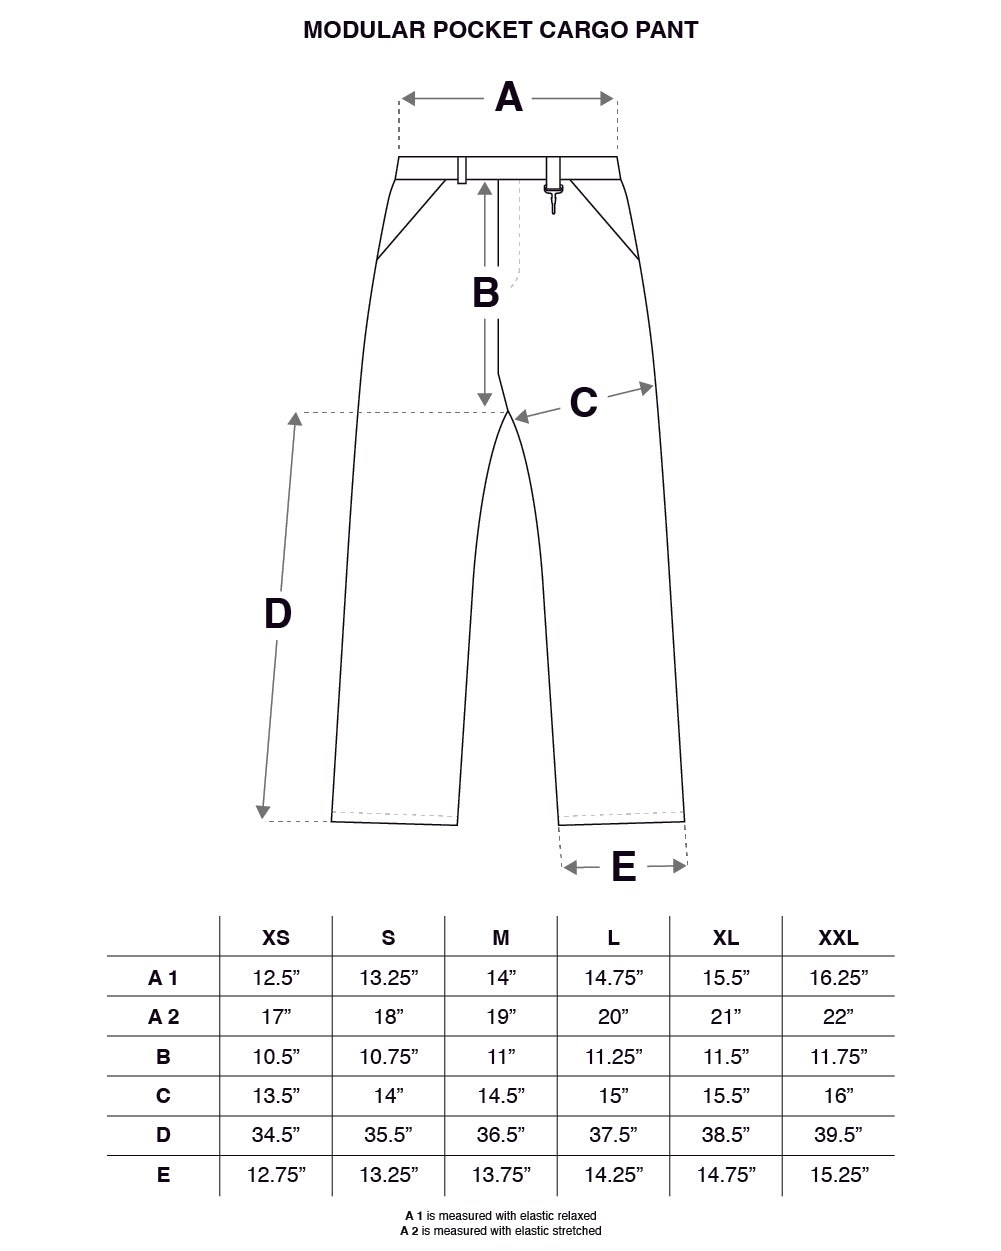 Modular Pocket Cotton Ripstop Cargo Pant in Camo Size Guide